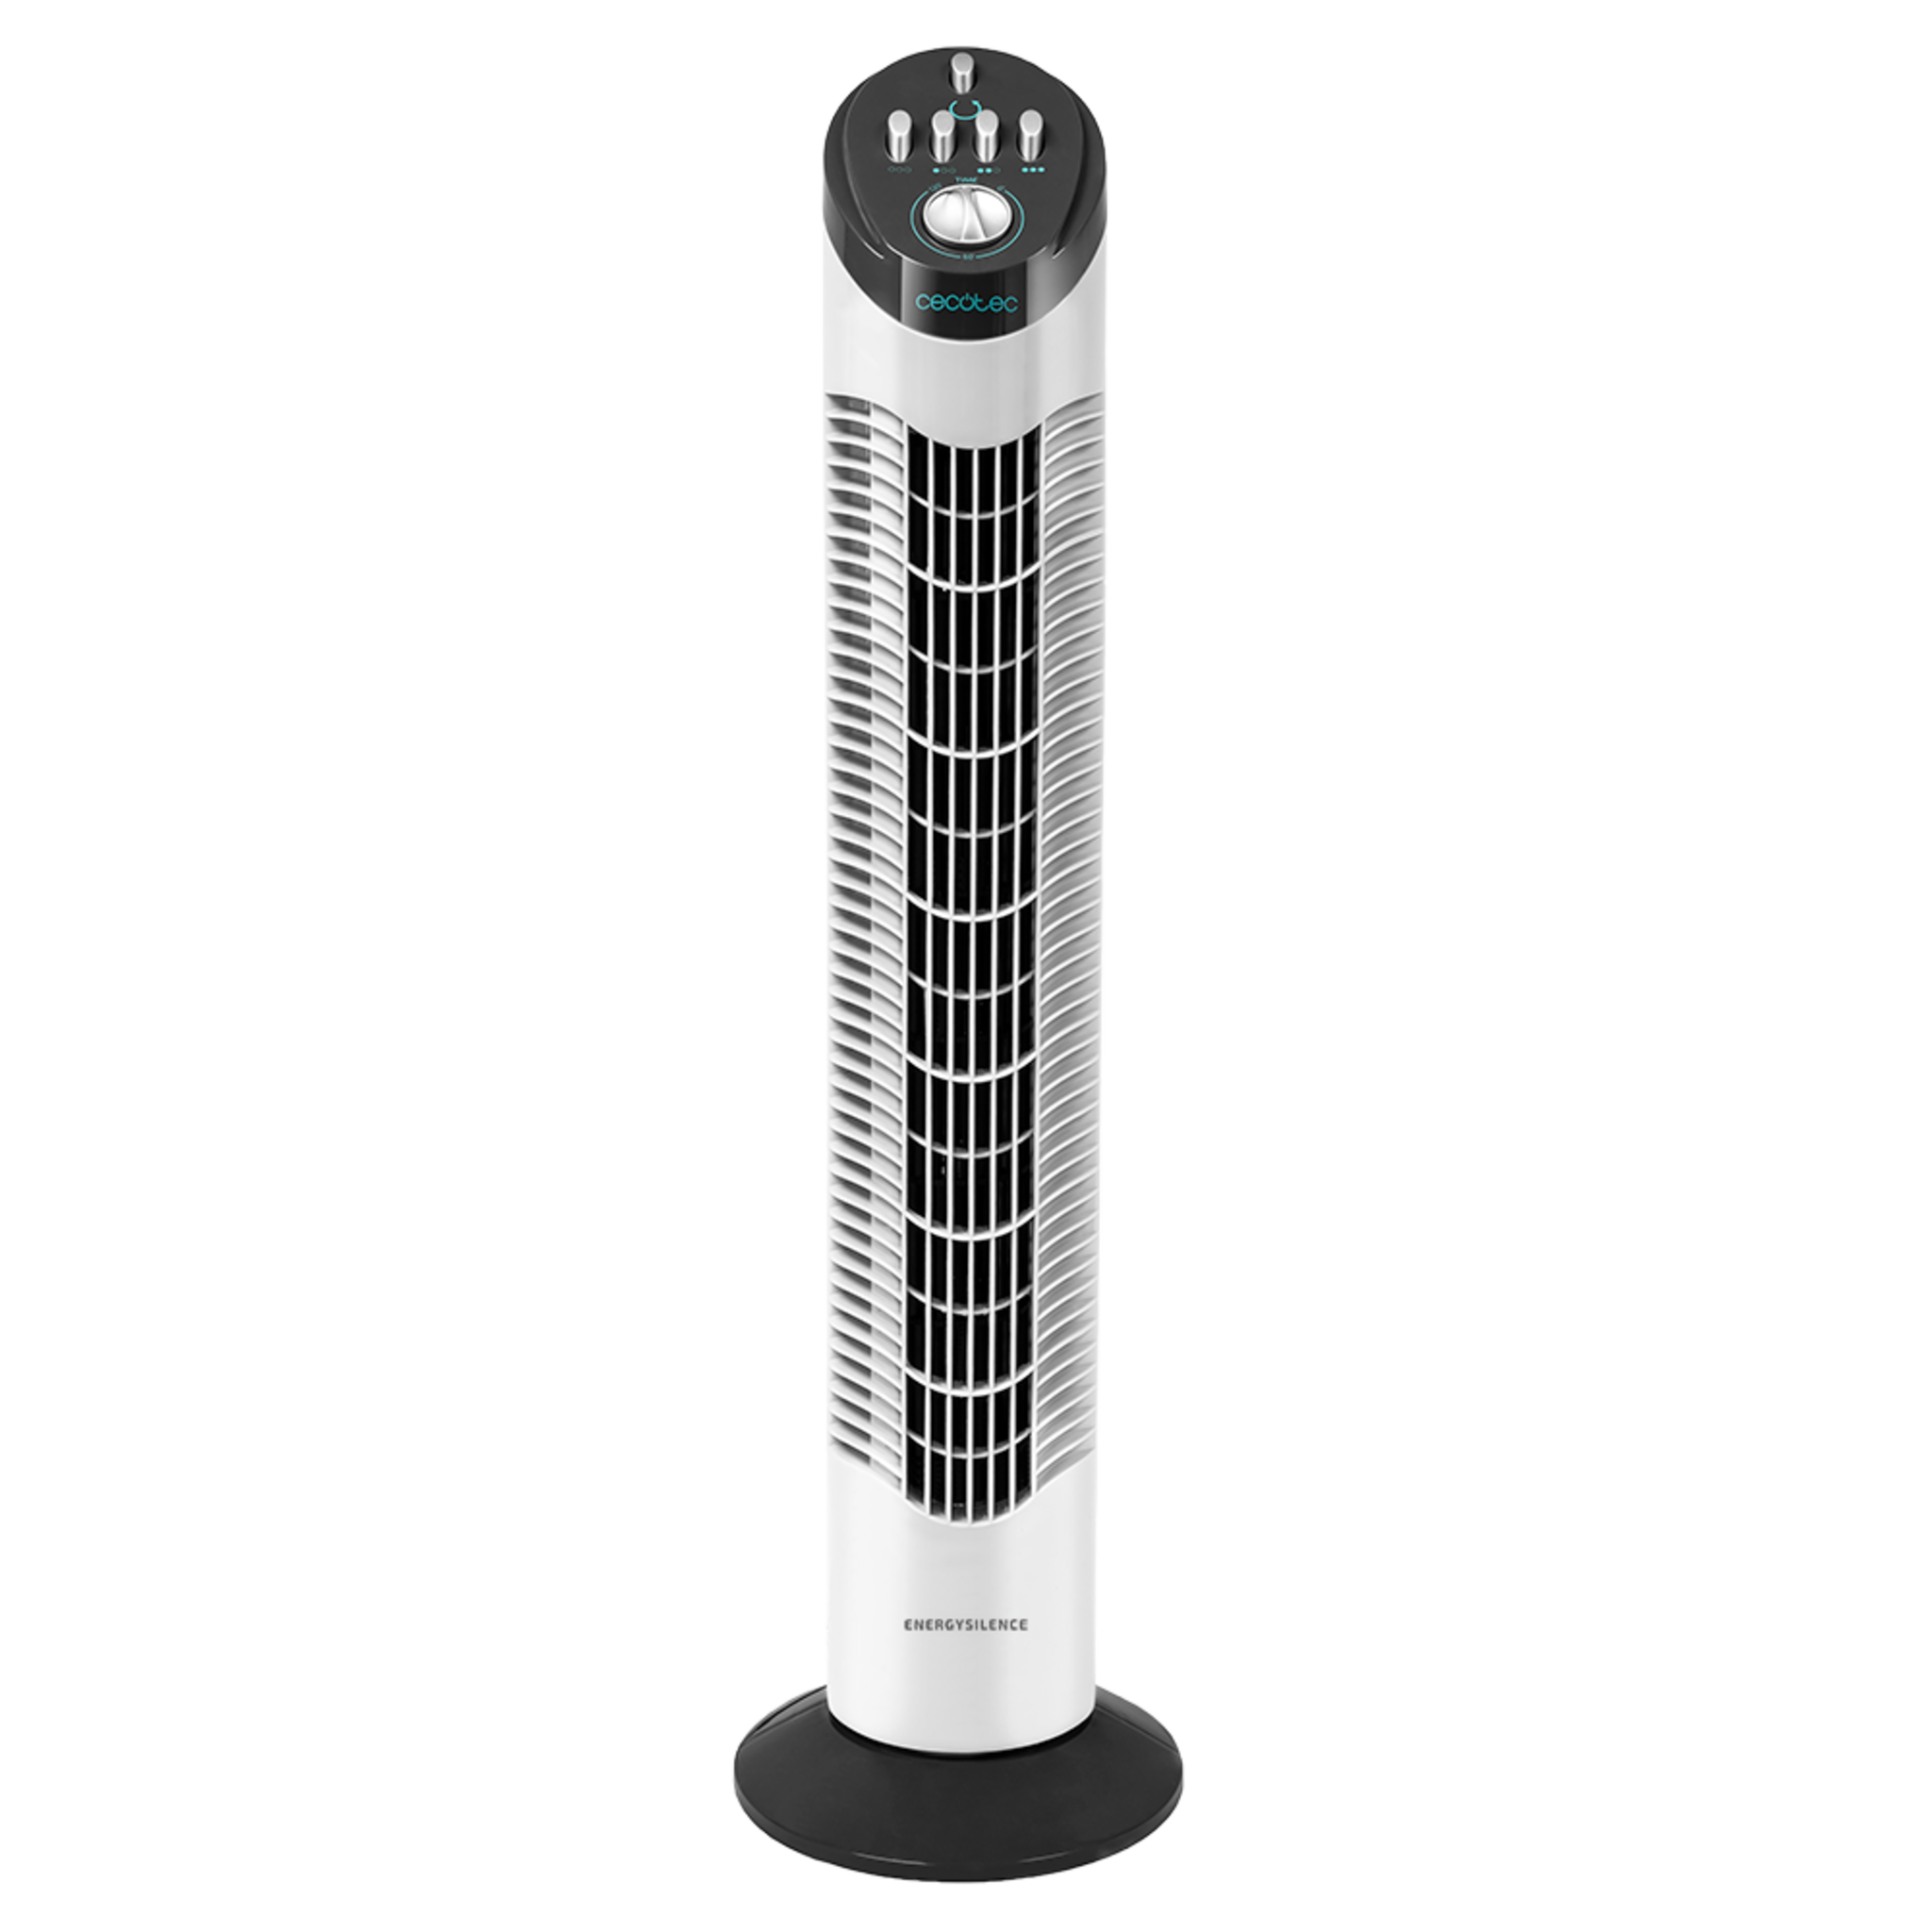 Facturable Cambiable Montañas climáticas Ventiladores de torre Cecotec Tienda Oficial | Envío Gratis